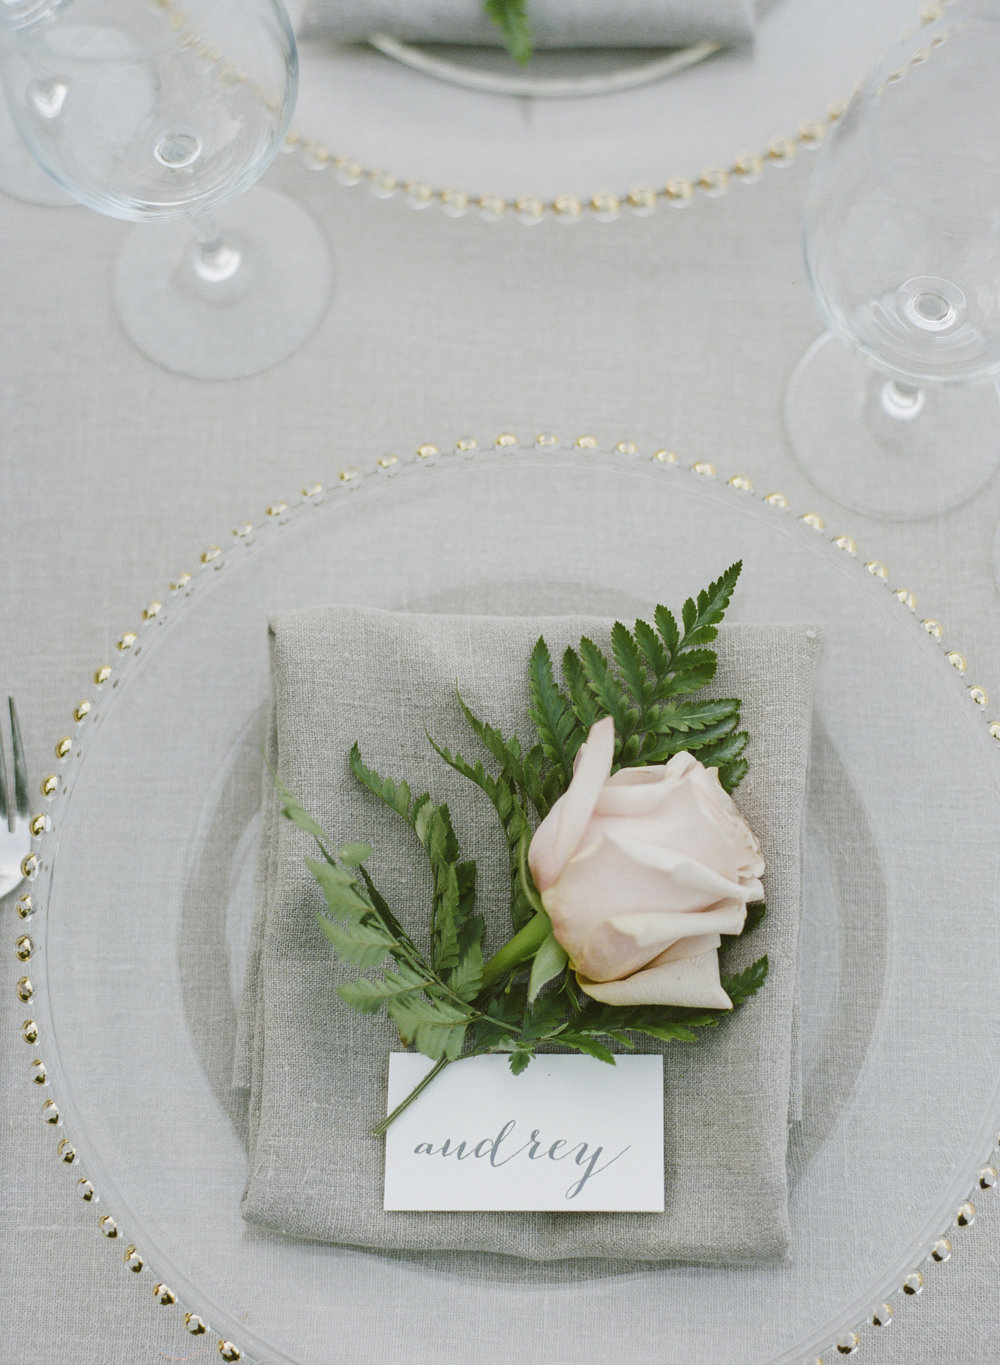 Violette-fleurs-roseville-sacramento-california-Flower-farm-inn-wedding-florist-spring-tablescape-blush-peach-detail-shots-closeups.jpg